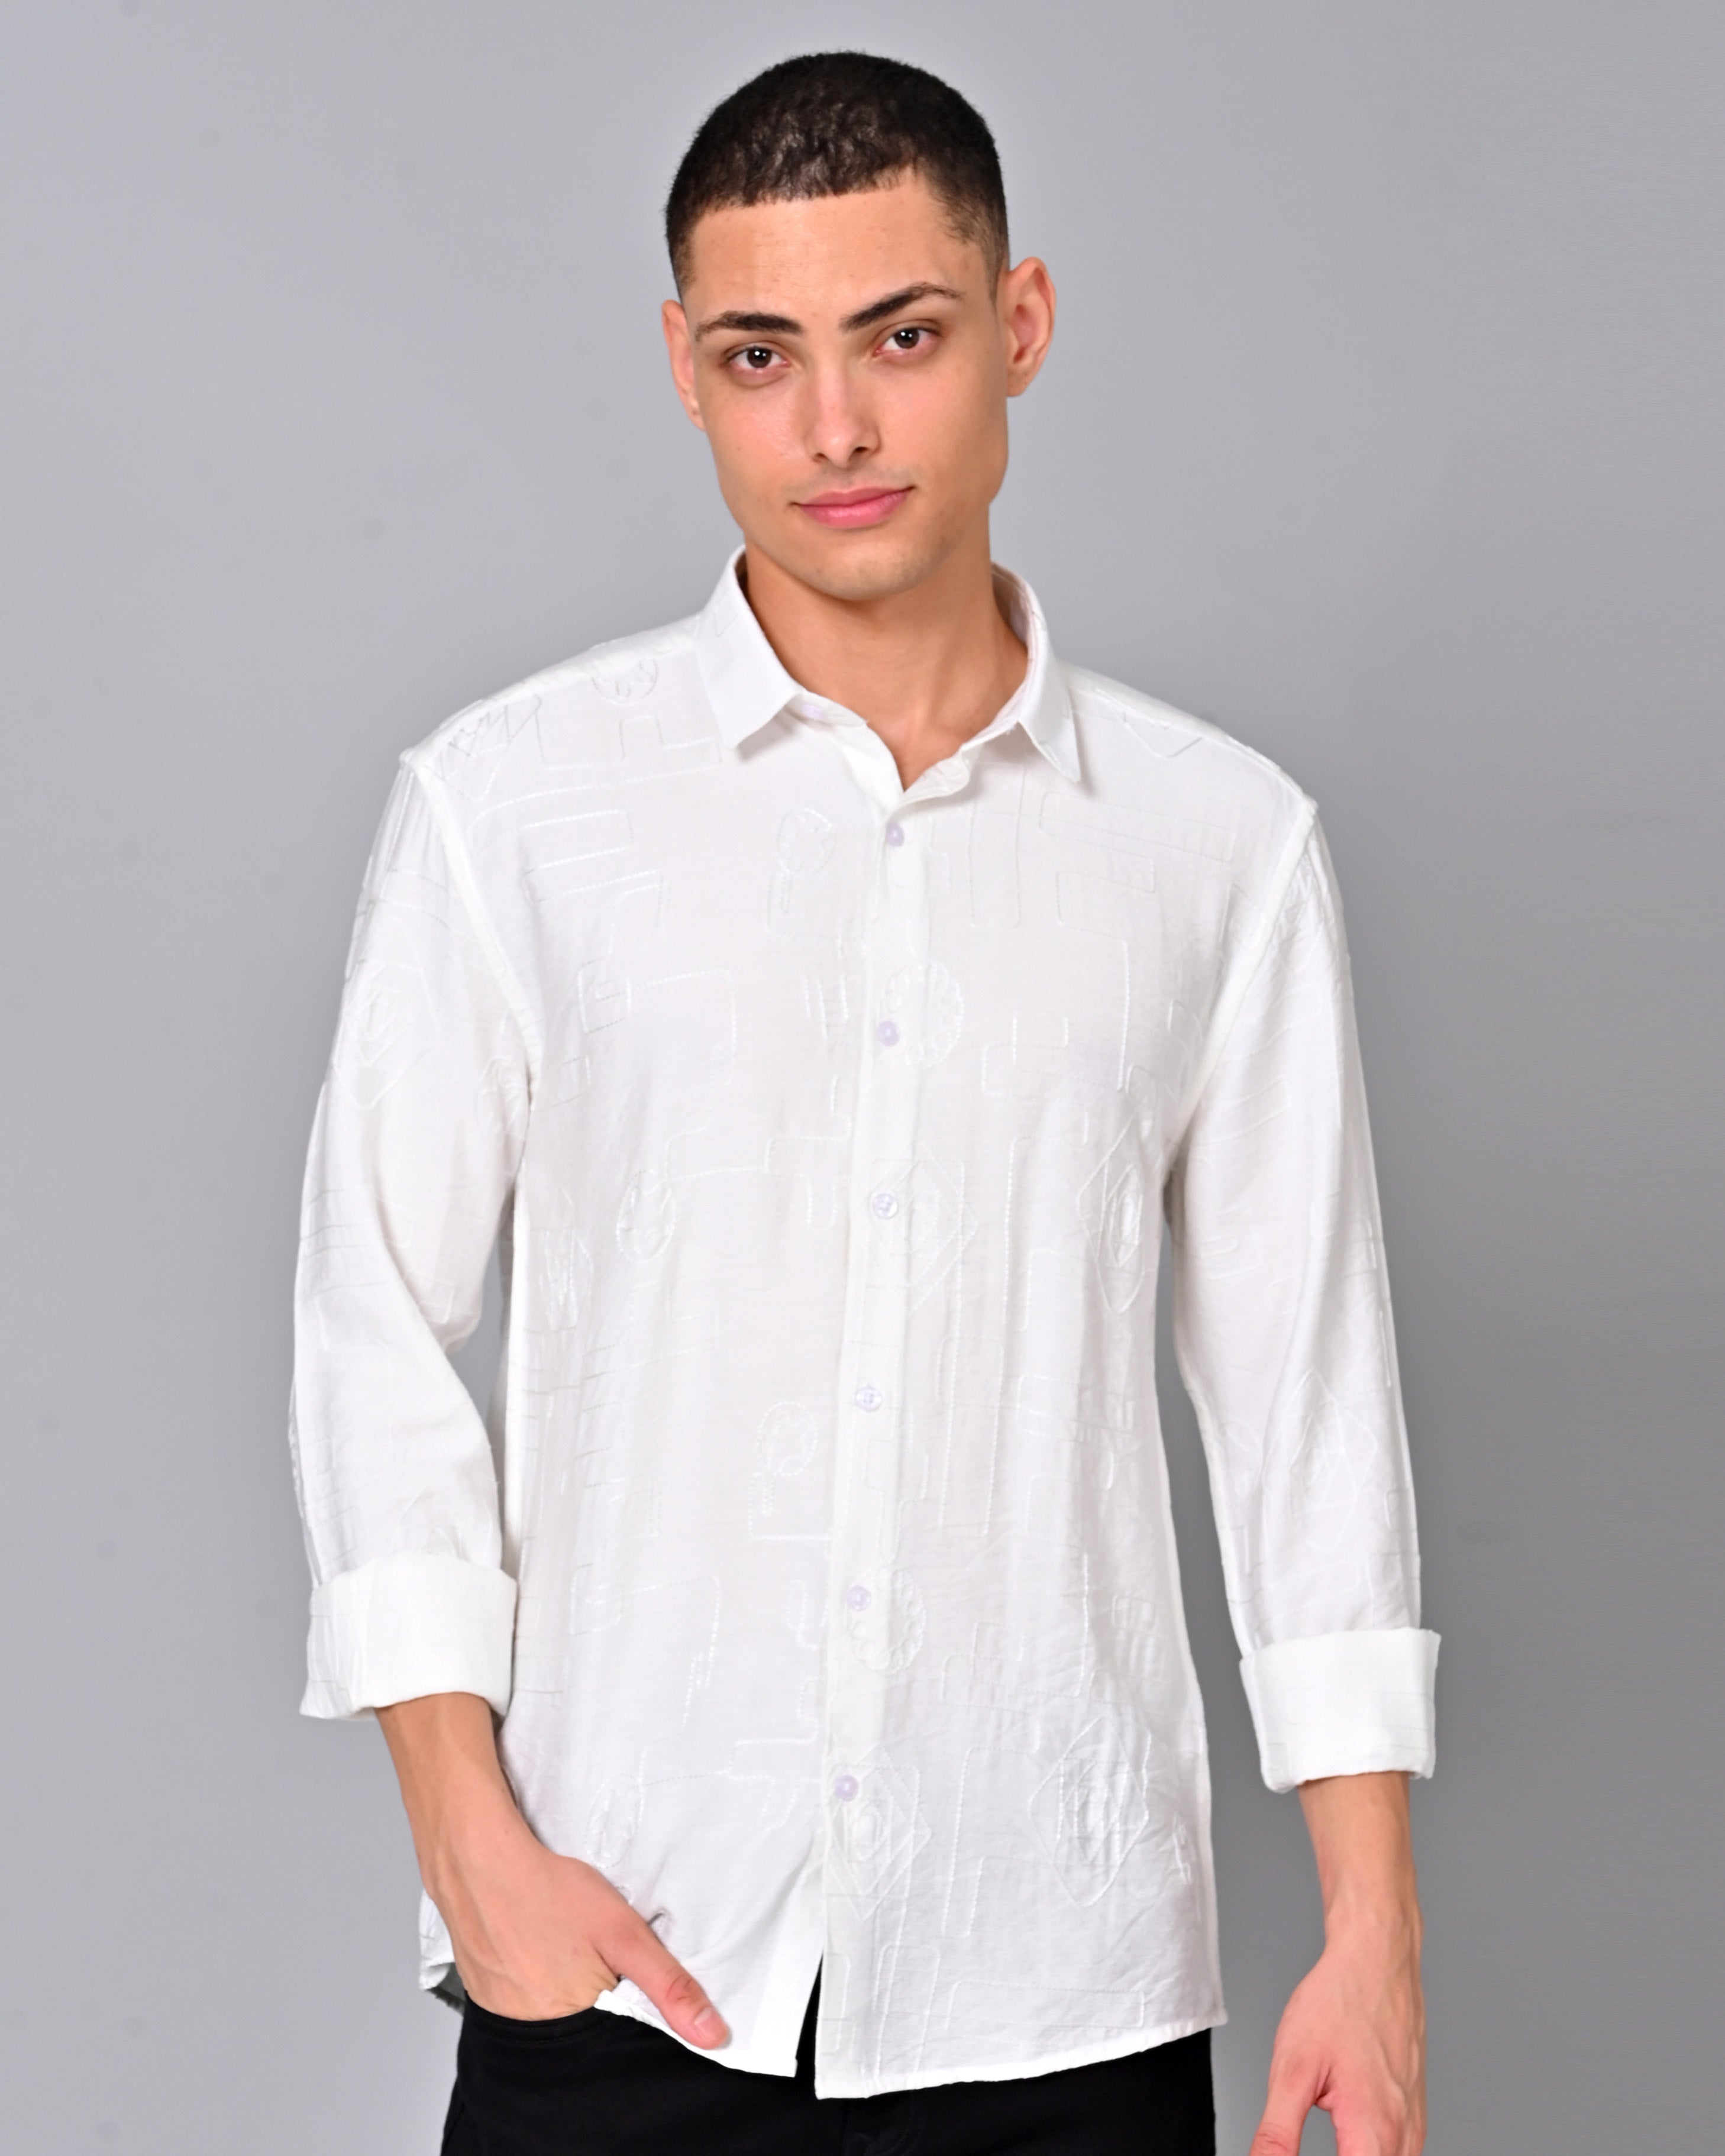 Men's Embroidered White Shirt Online